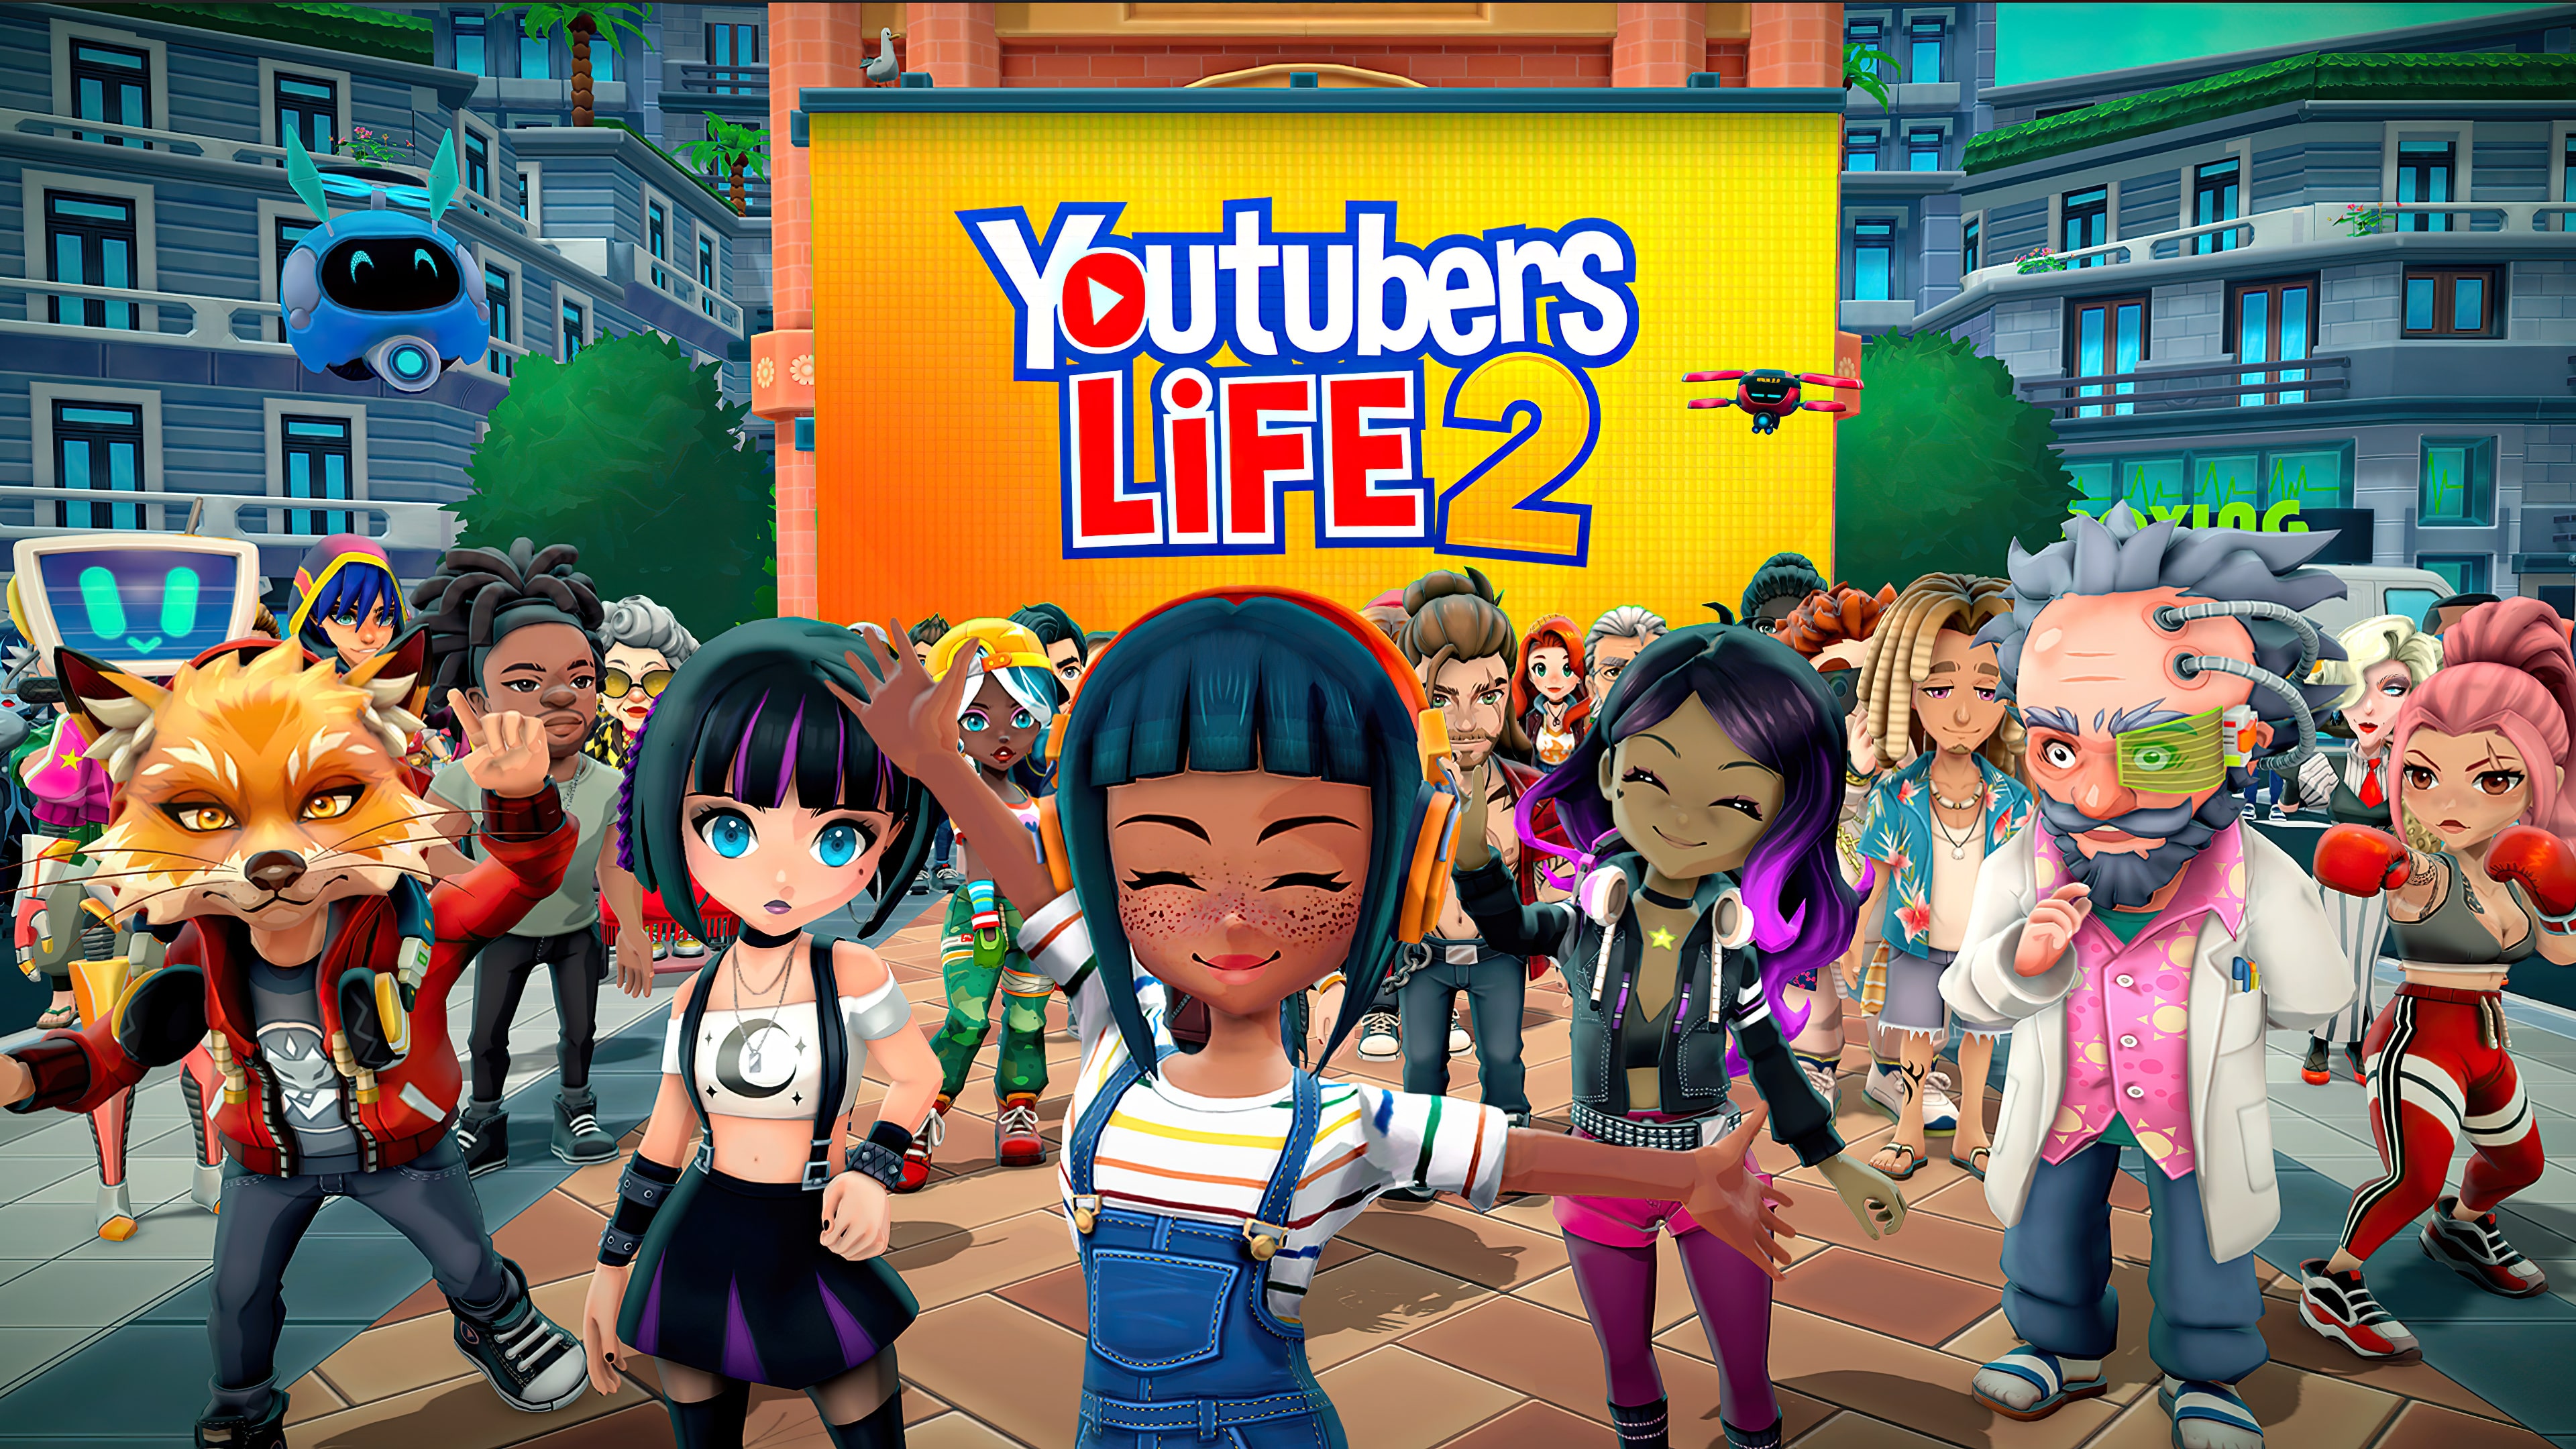 Видео игры ютубера. YOUTUBERS Life 2. YOUTUBERS Life 2 Art. Игра про жизнь ЮТУБЕРА 2. Игра YOUTUBERS Life.